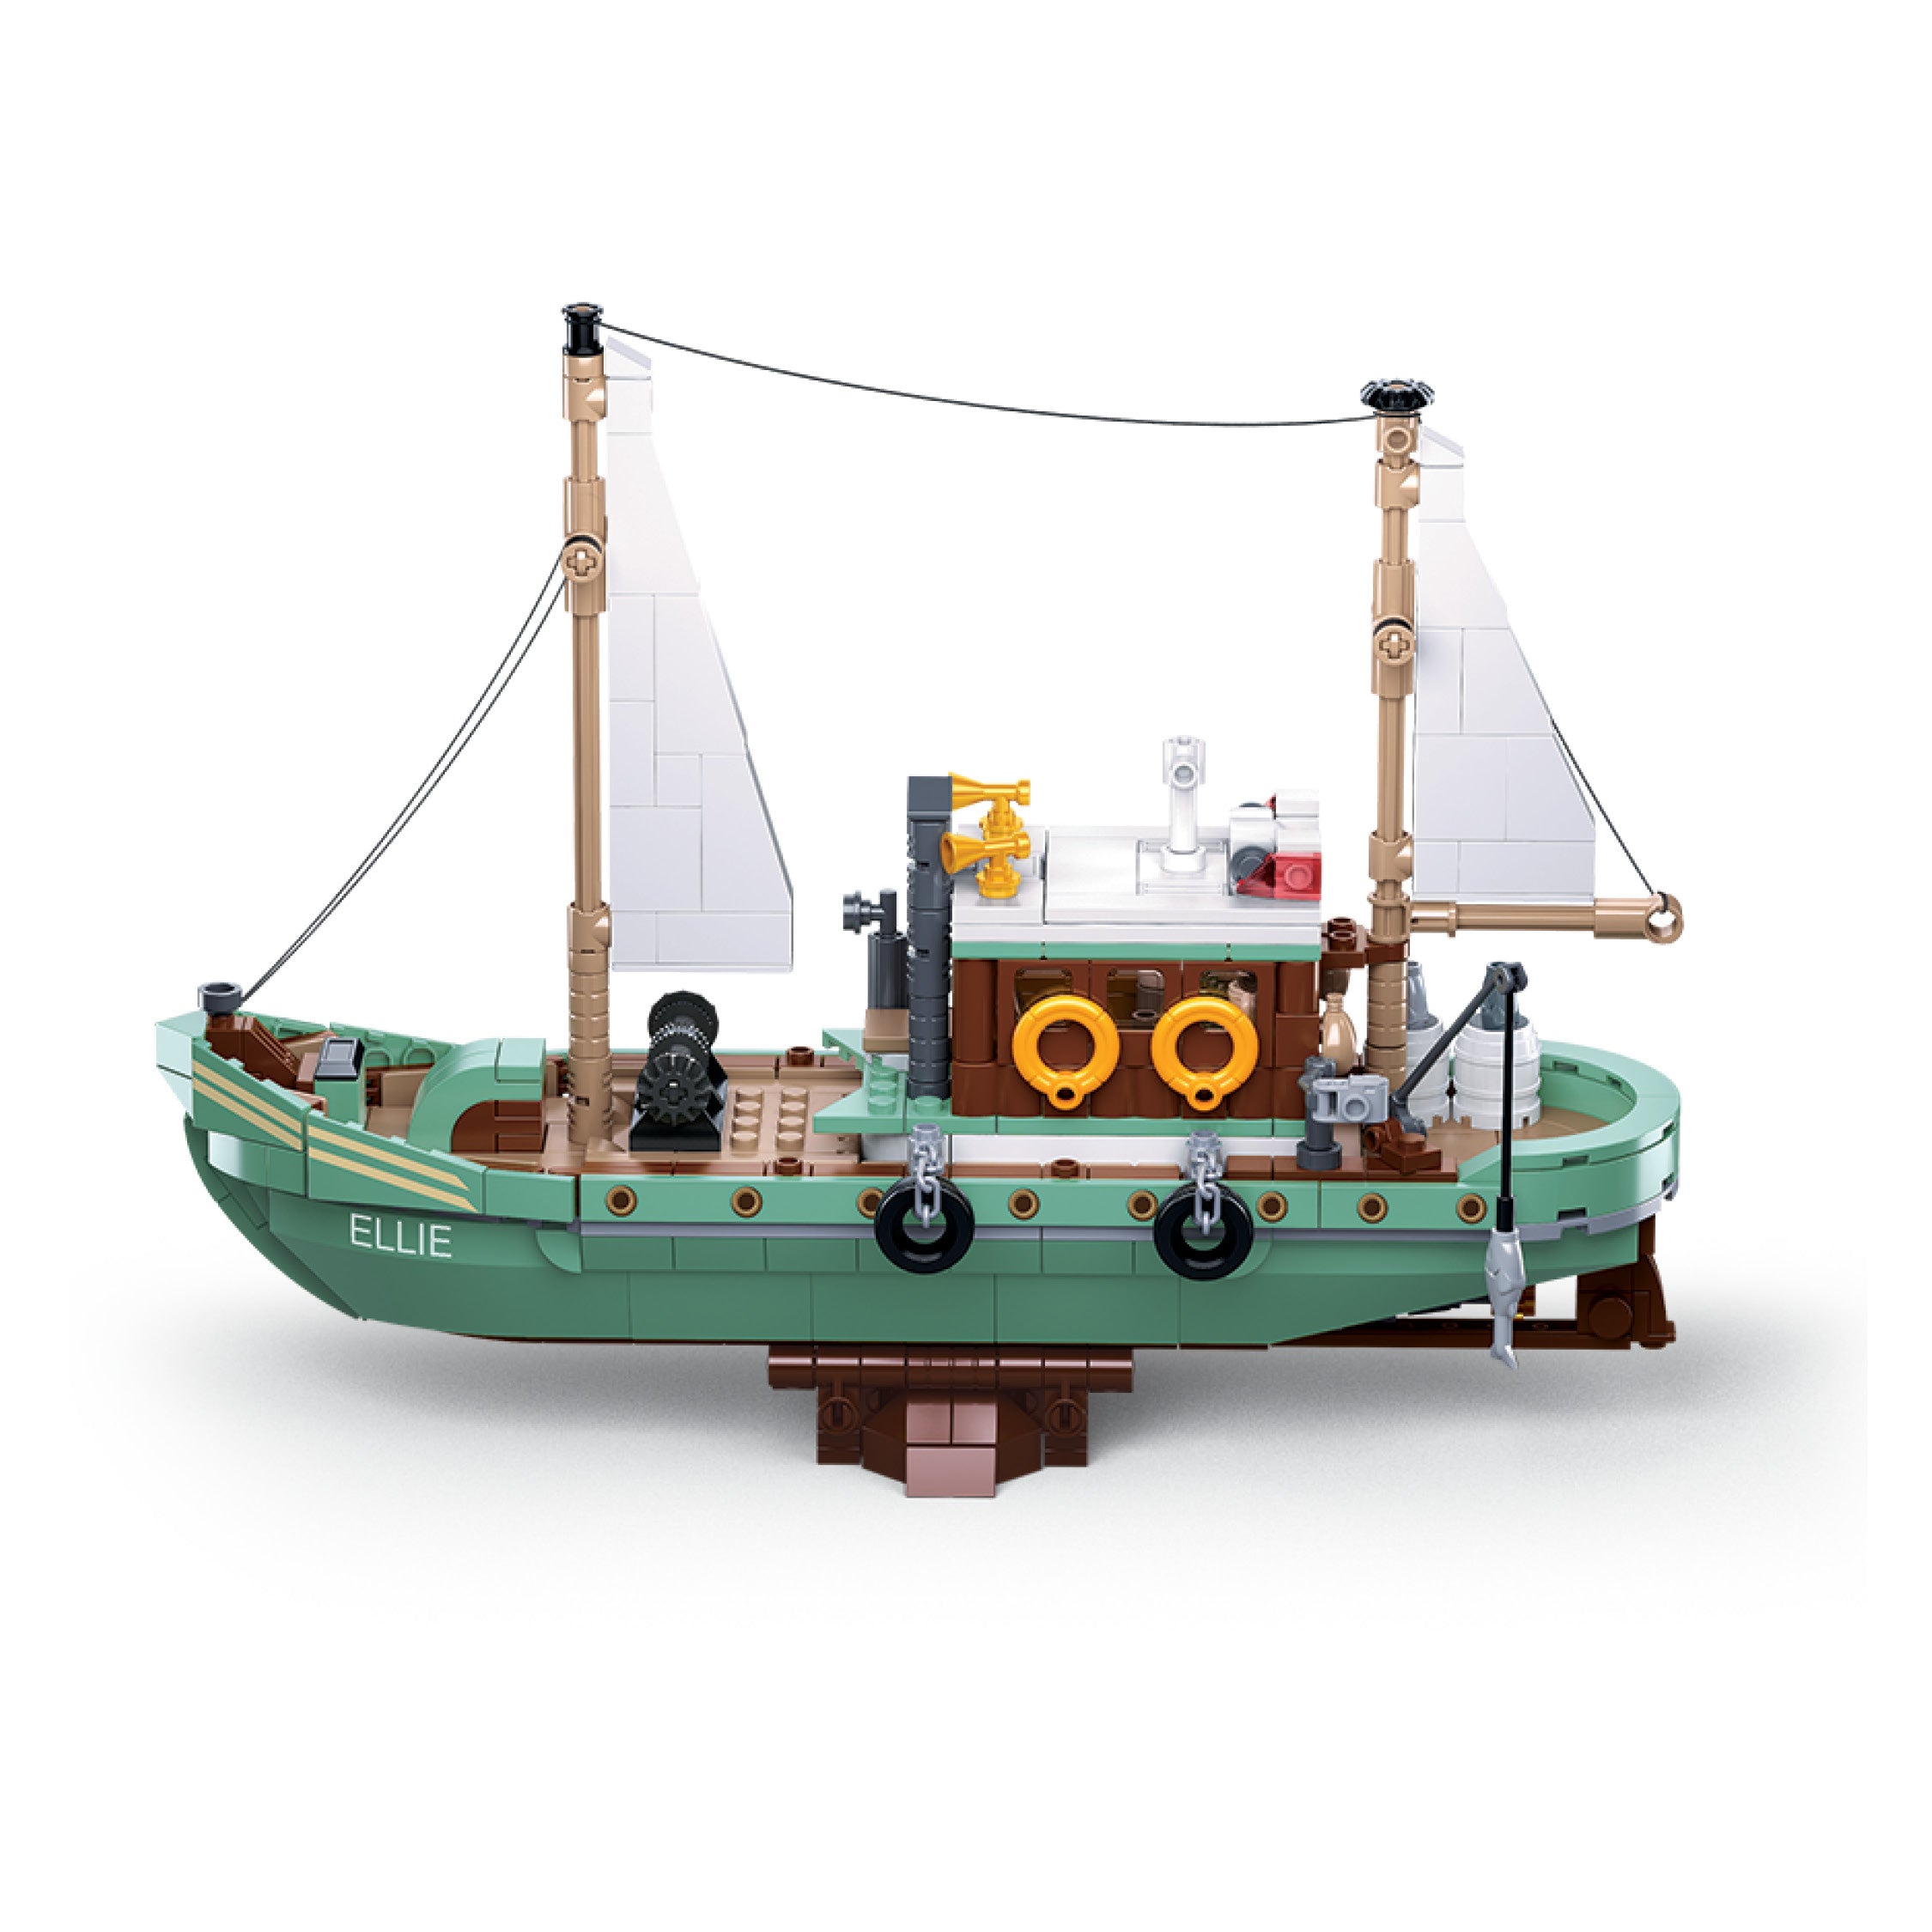 SLUBAN® MODELBRICKS-Fishing-Boat 610pcs (M38-B1119) Building Blocks Kit For Boys And  Girls Aged 8 Years And Above Creative Construction Set Educational  STEM Toy